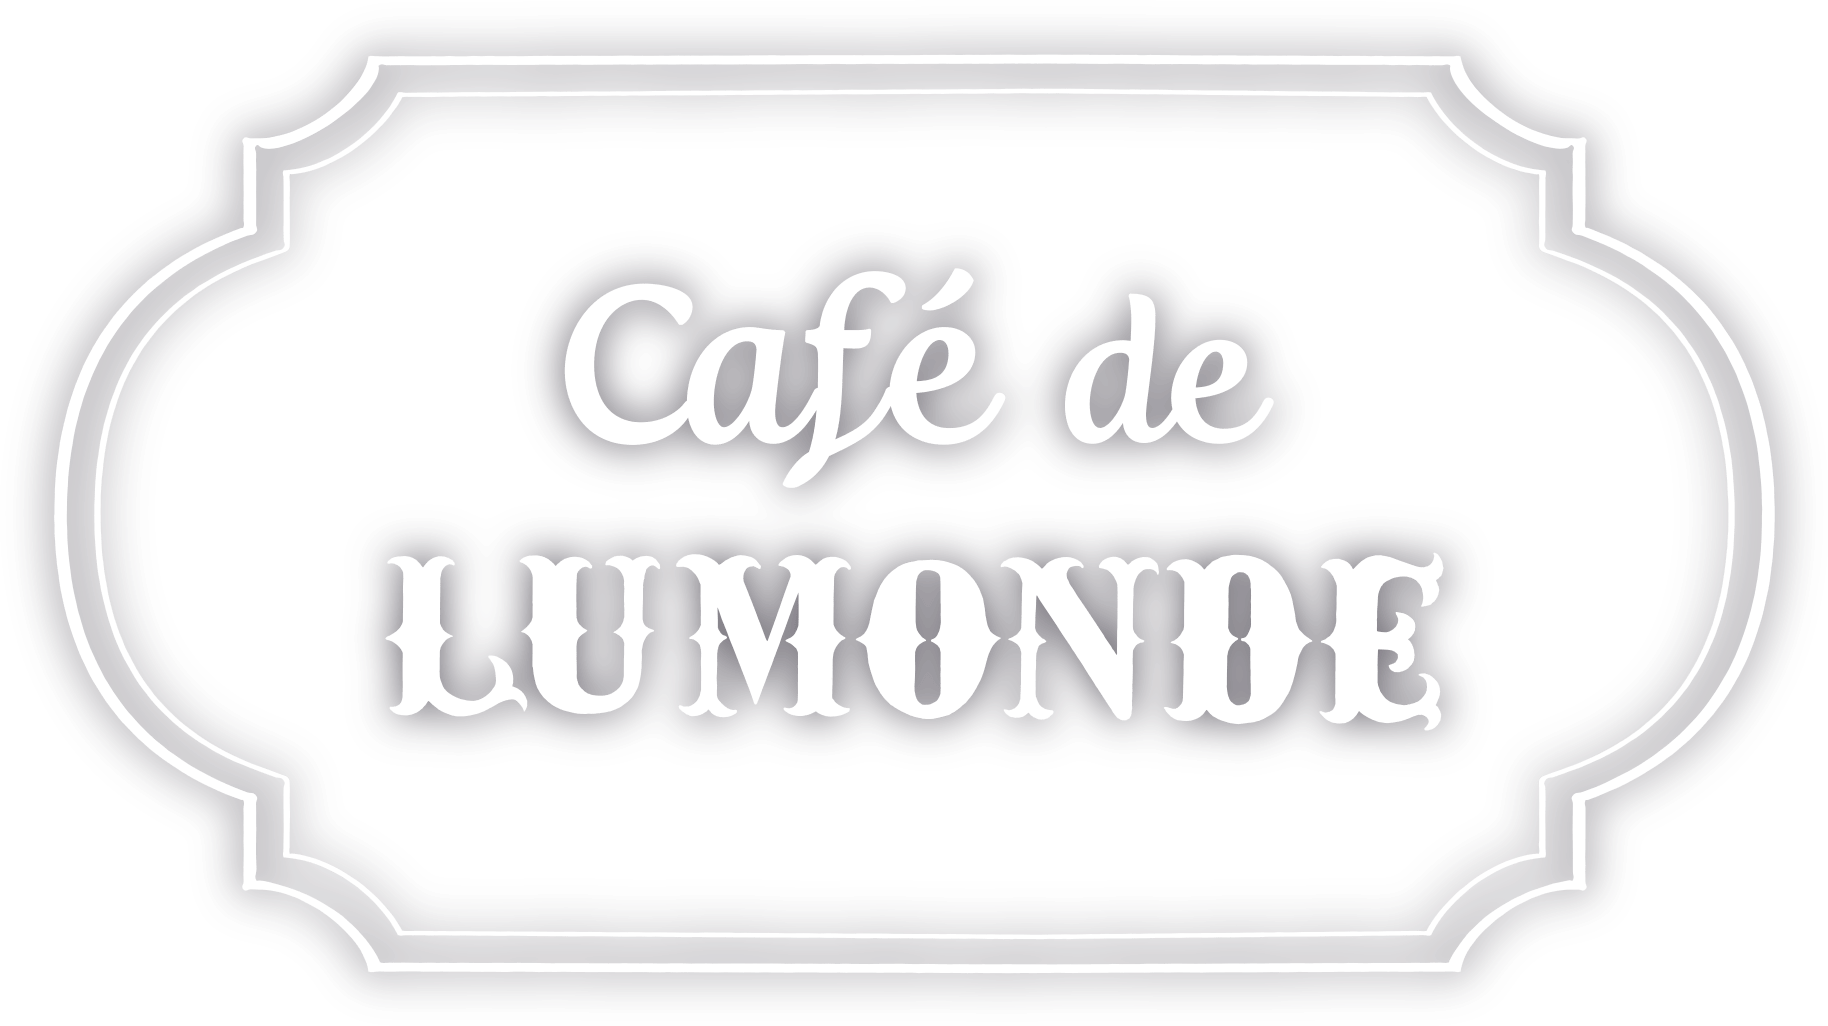 Cafe de LUMONDE